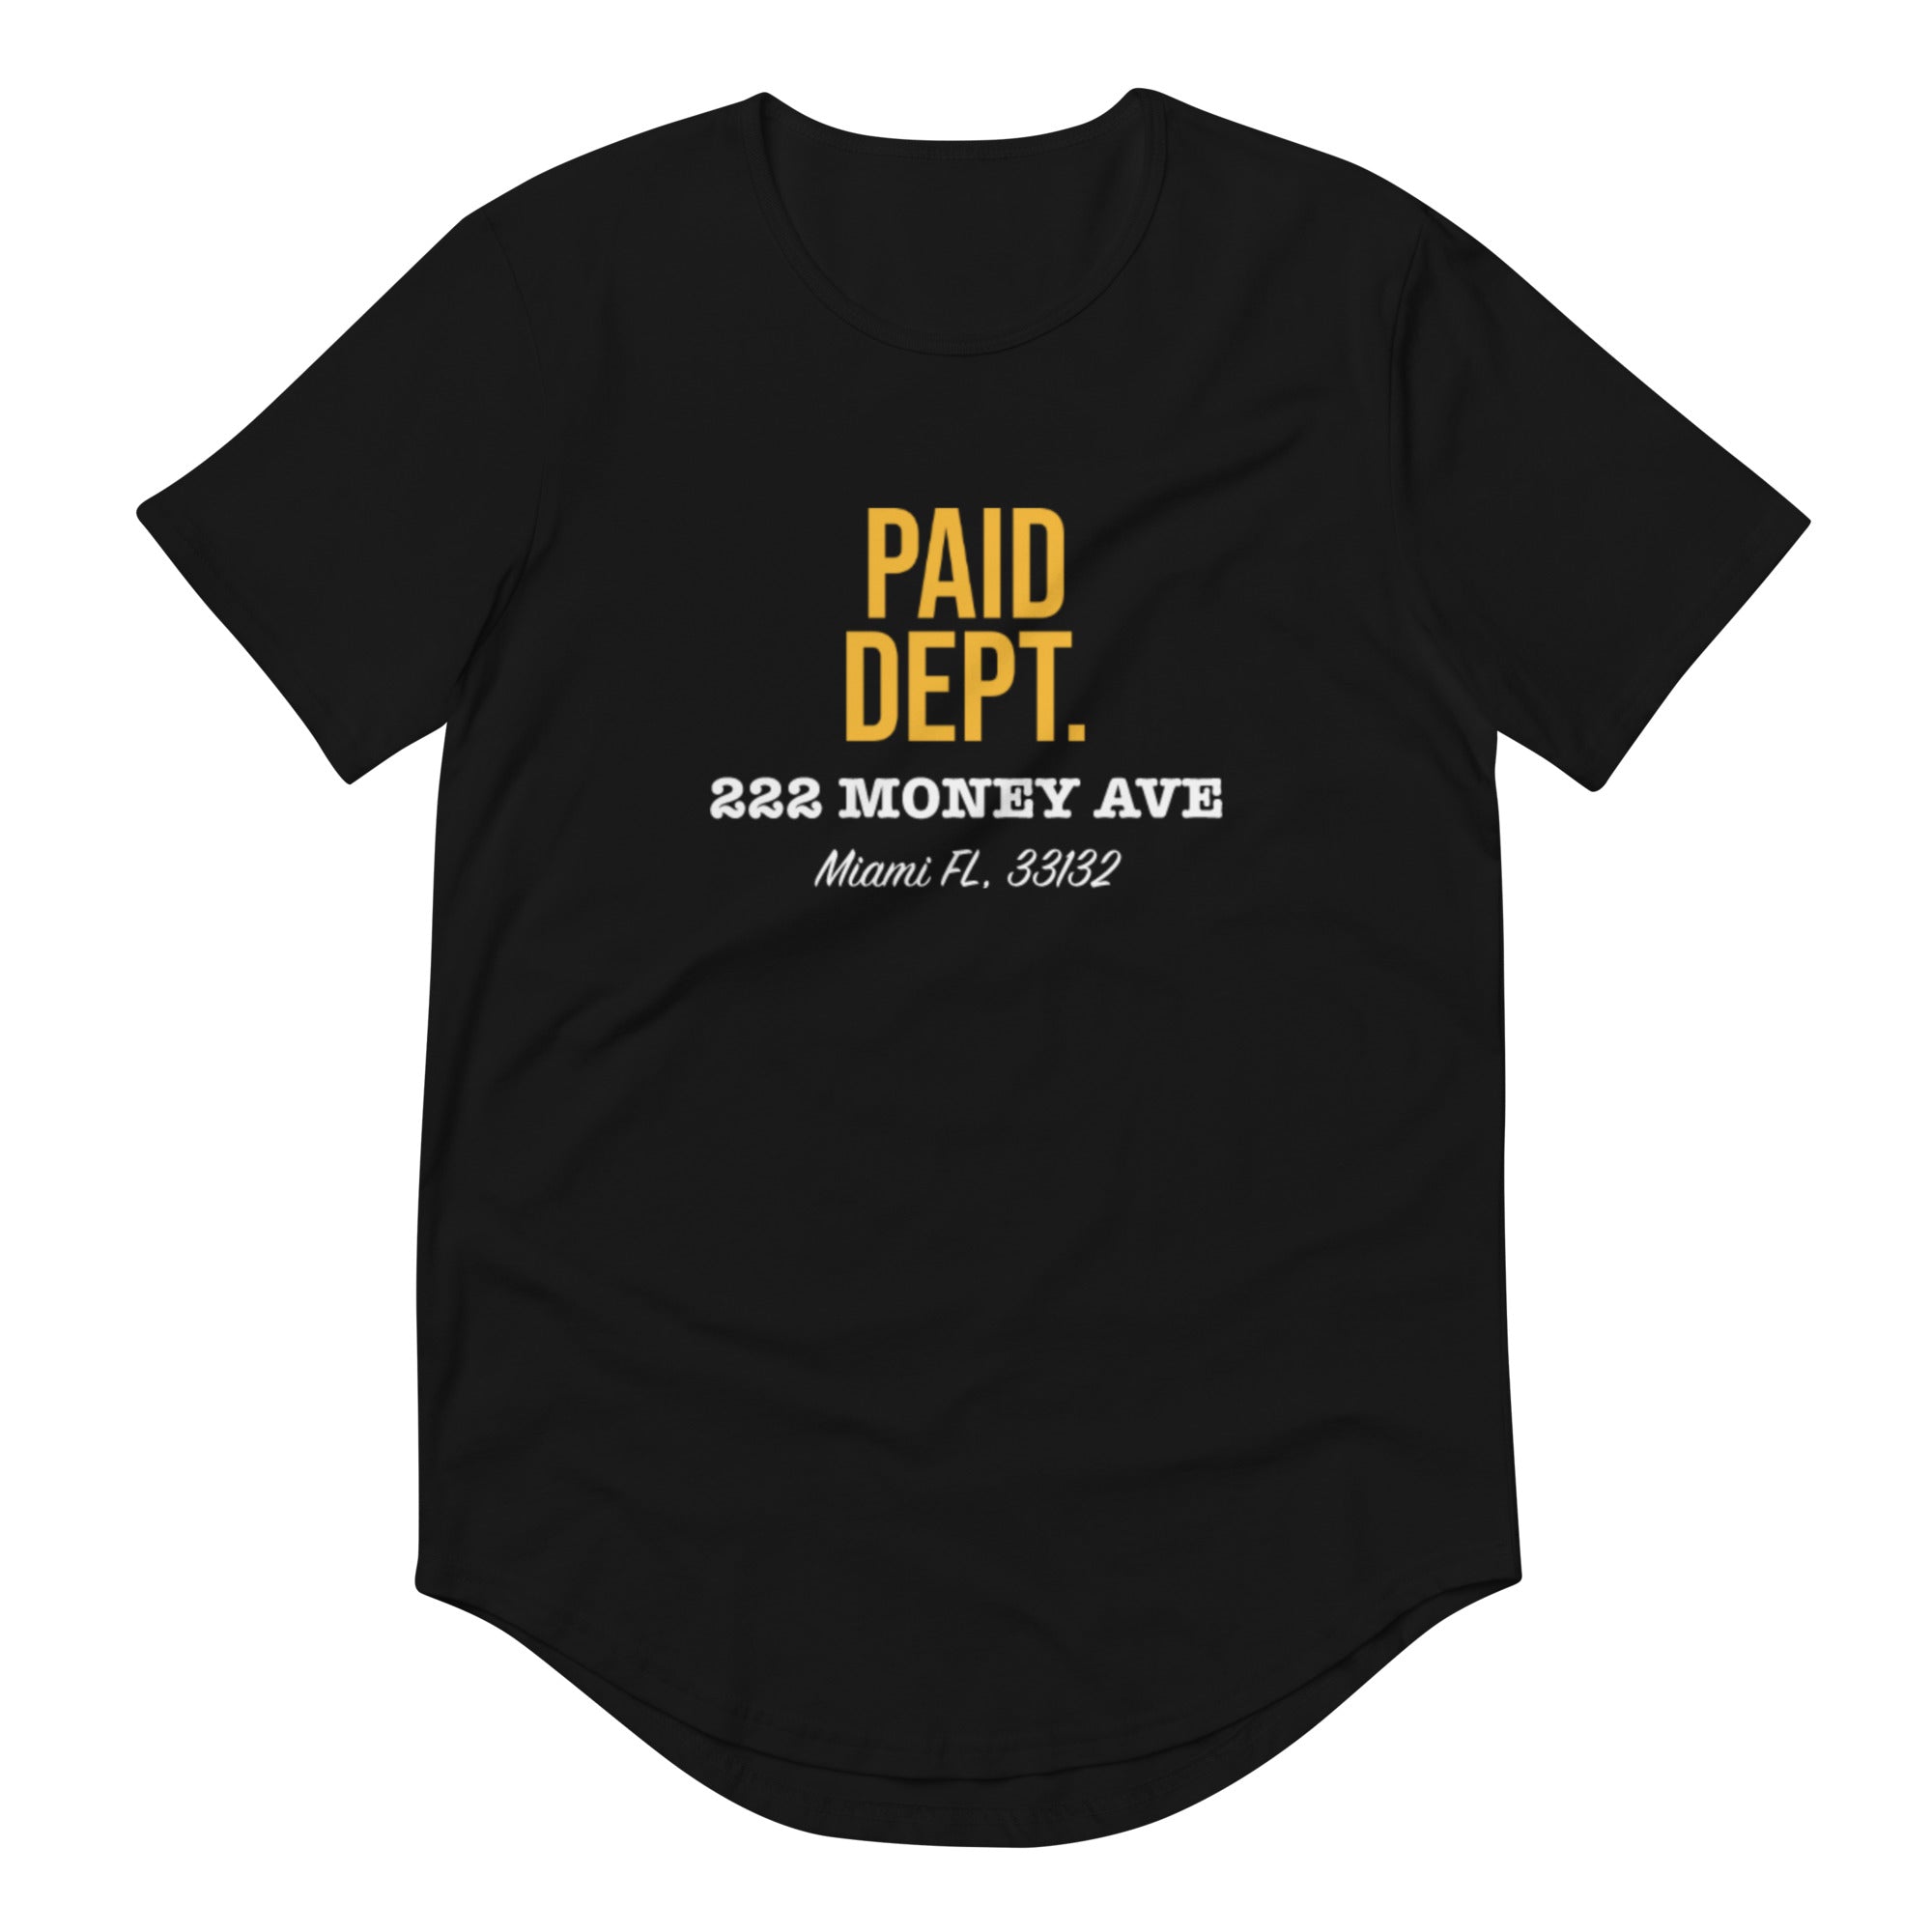 PAID DEPT. Men's Curved Hem T-Shirt